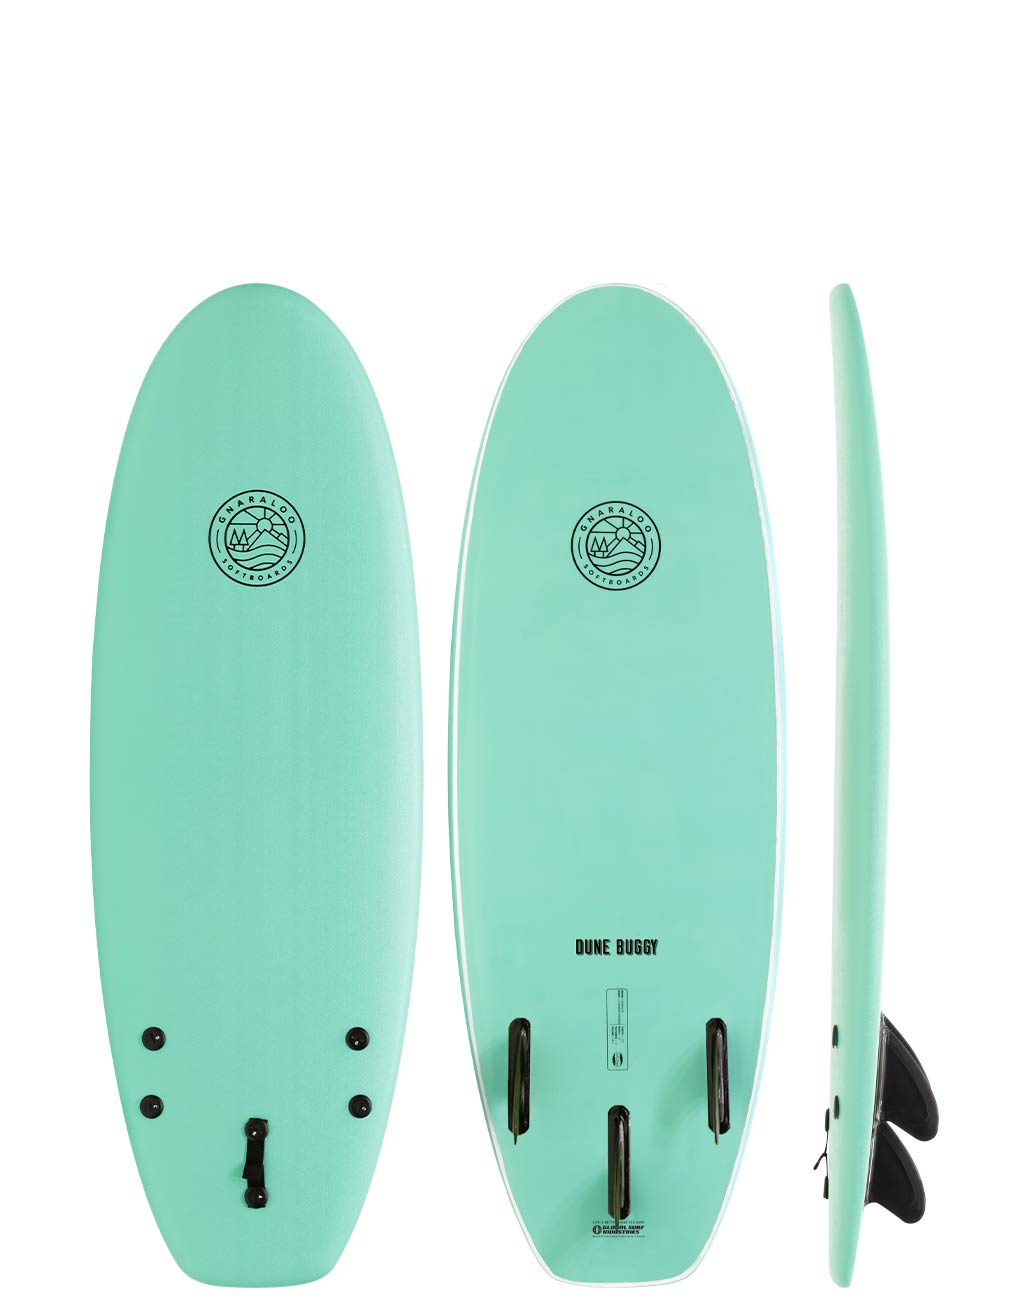 Gnaraloo soft surfboards - Dune Buggy green surfboard